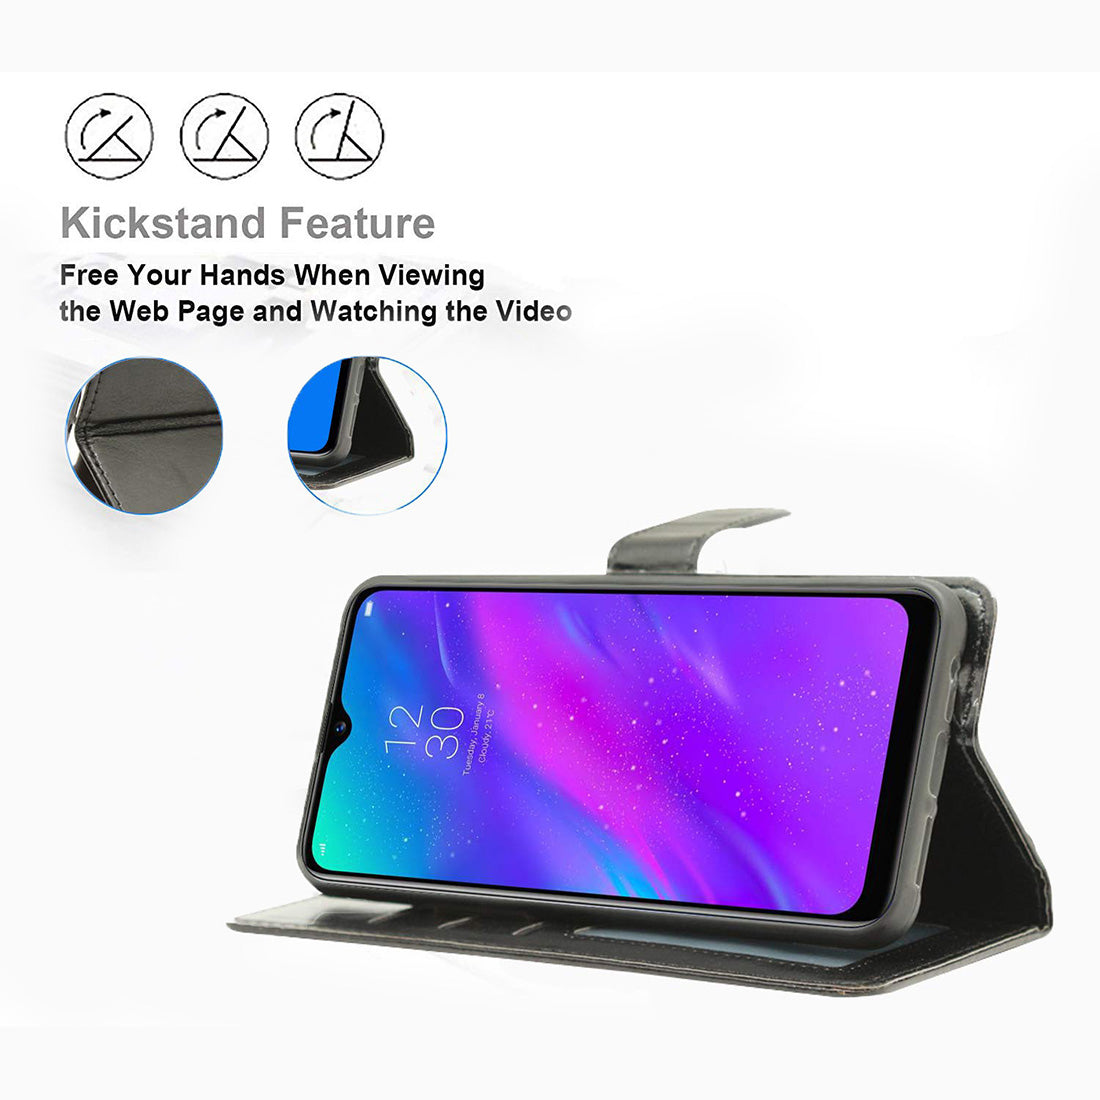 Premium Wallet Flip Cover for Realme 7 Pro